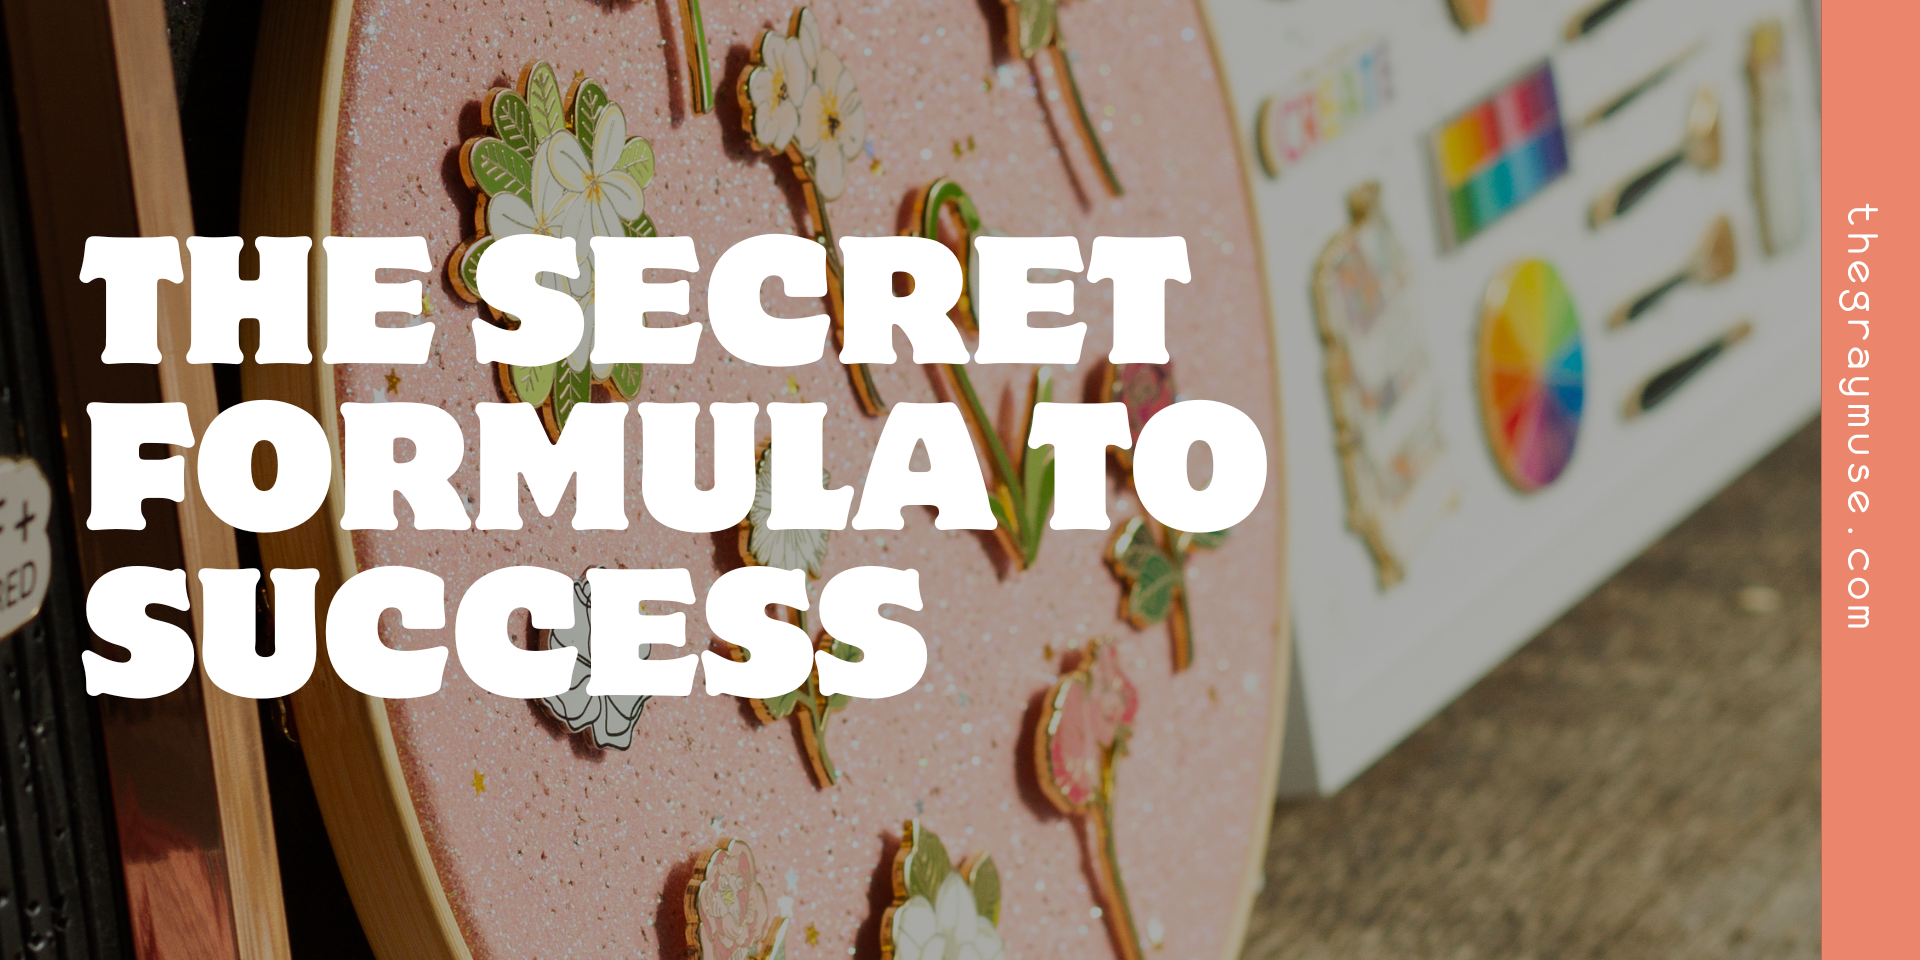 The Secret Formula to Success